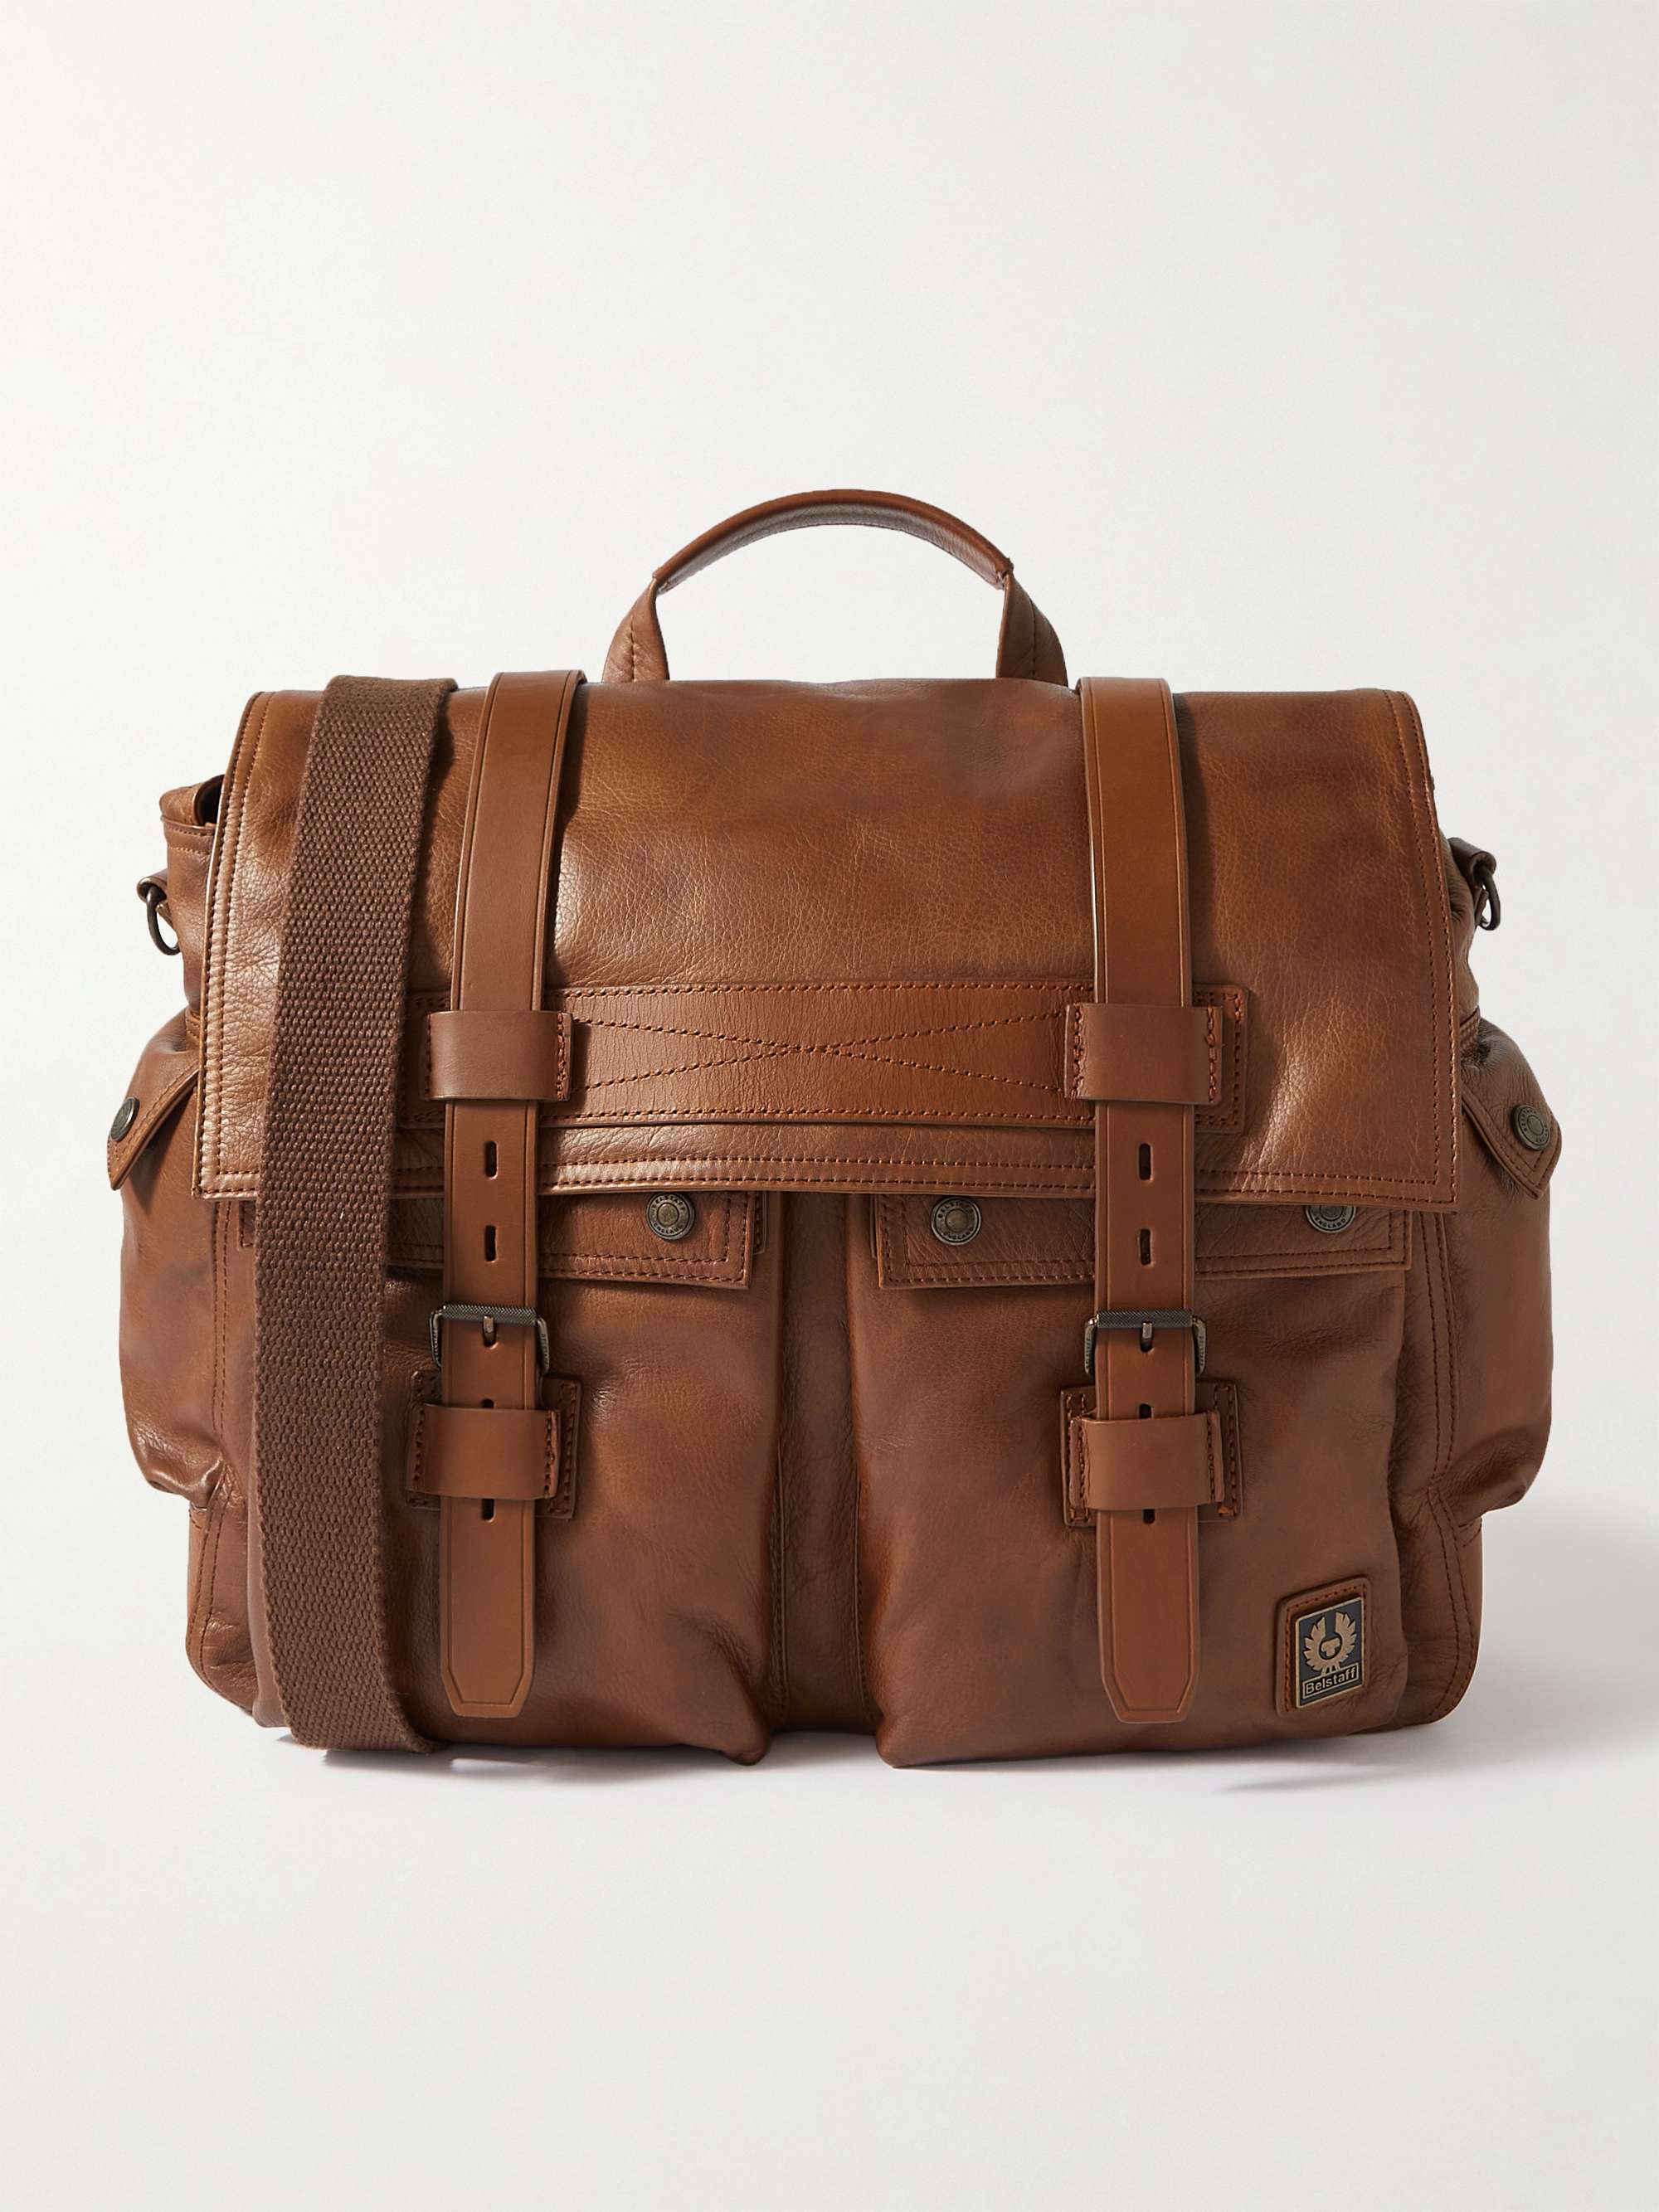 Tan Colonial Leather Weekend Bag | BELSTAFF | MR PORTER